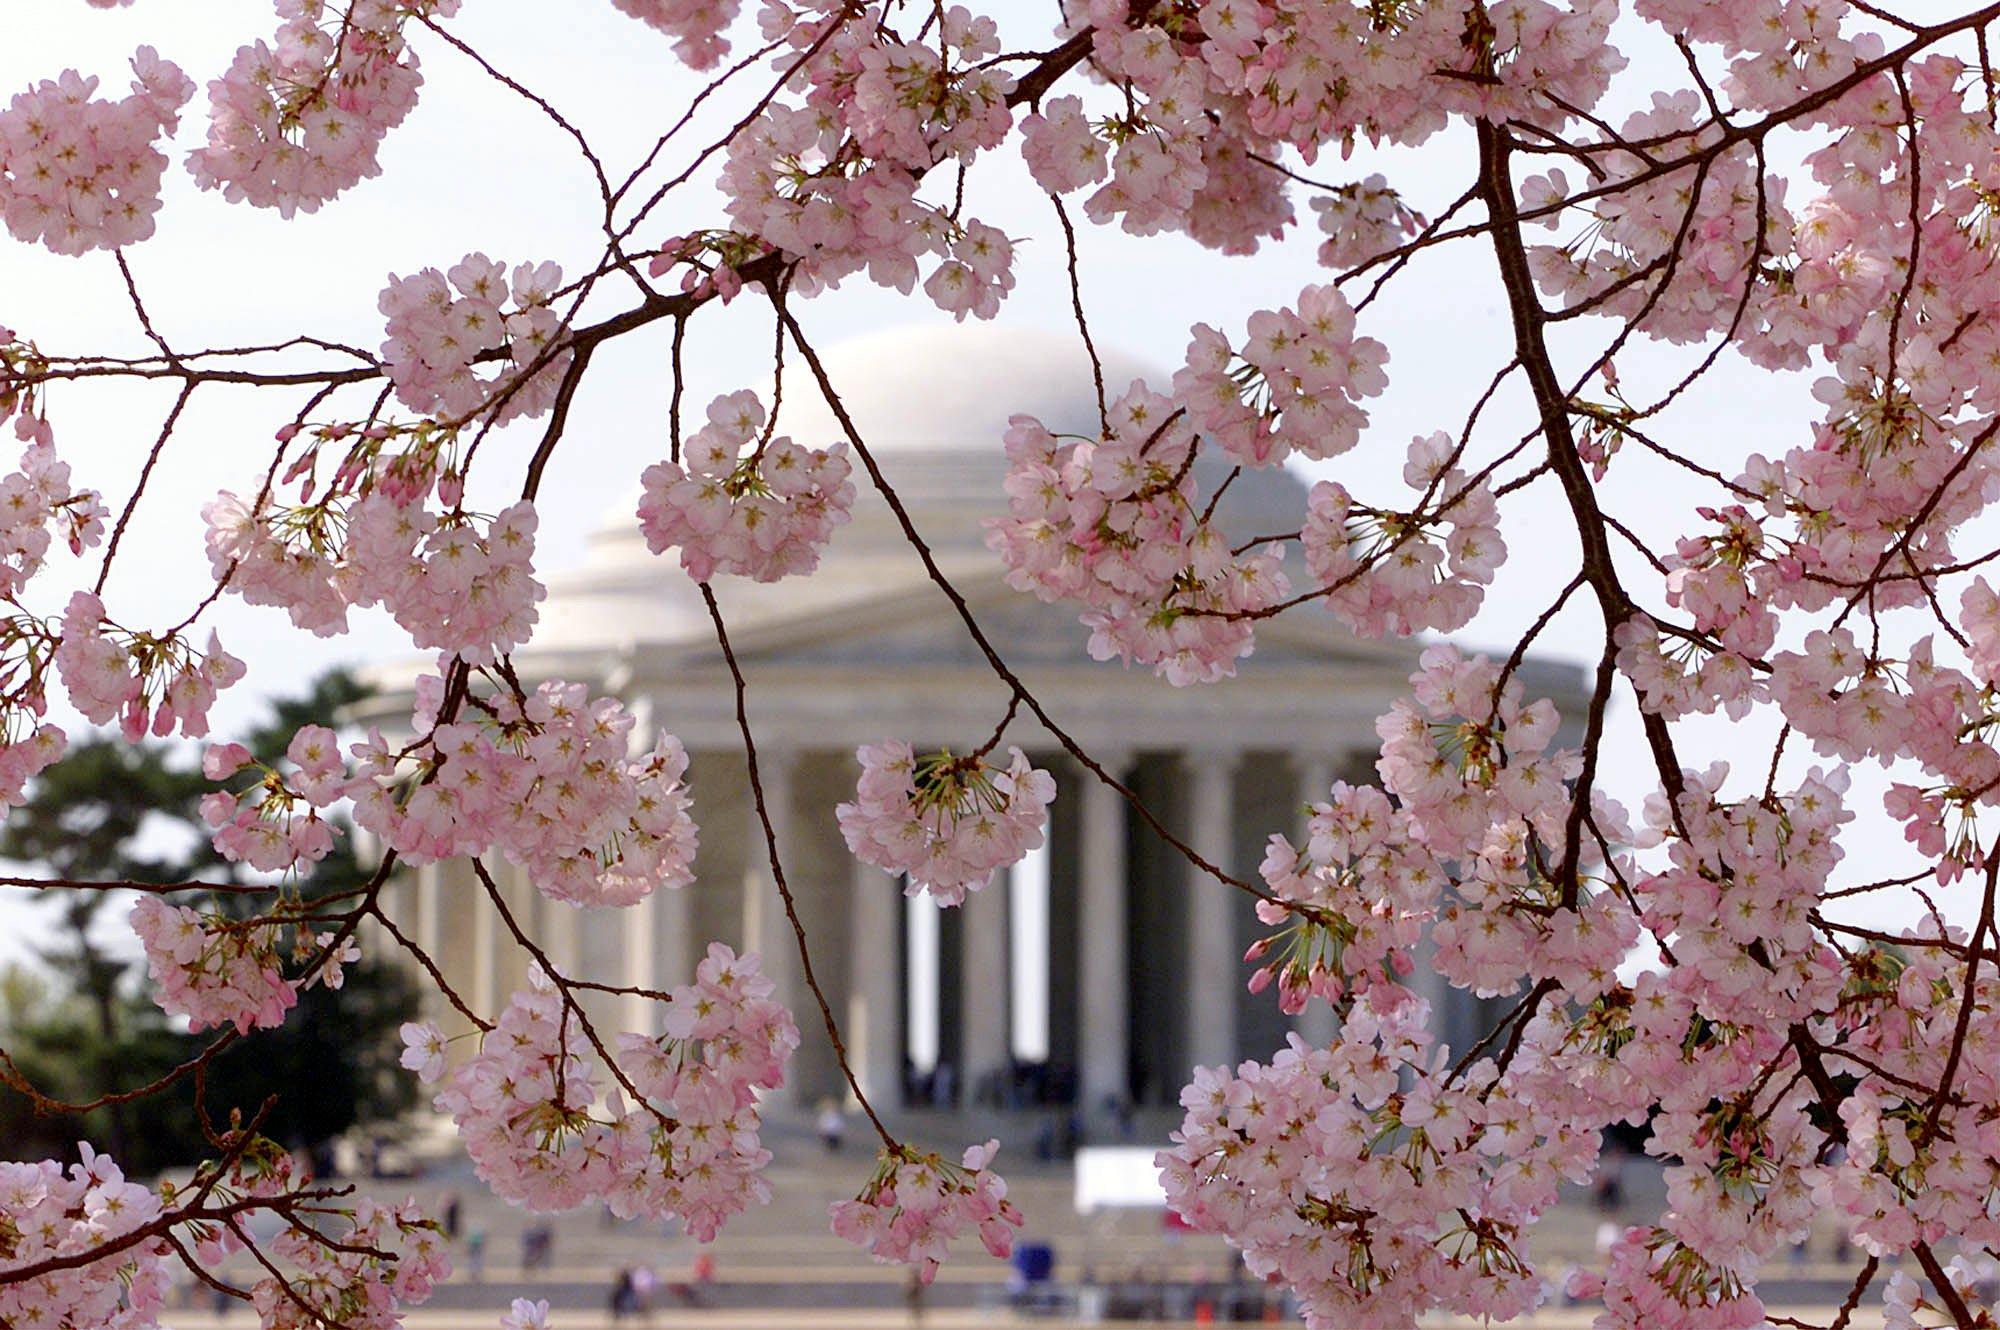 National Park Service revises peak Cherry blossom bloom dates